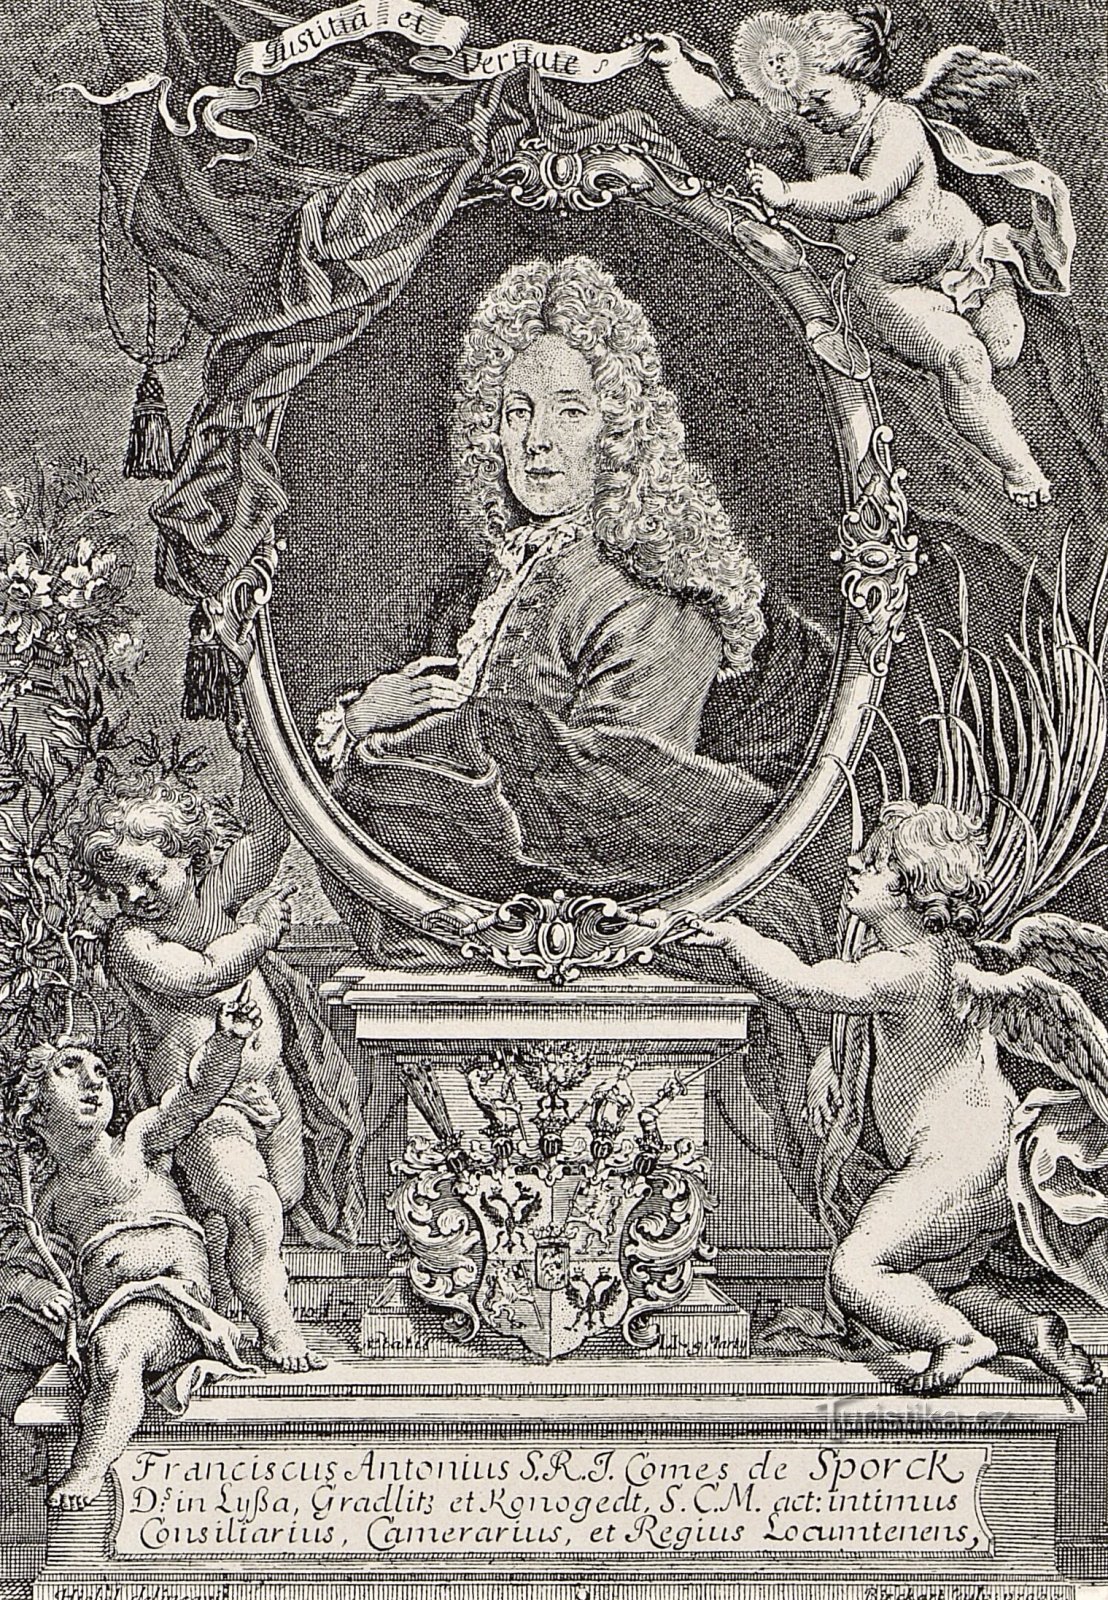 František A. Spork 伯爵在 1713 年的版画上